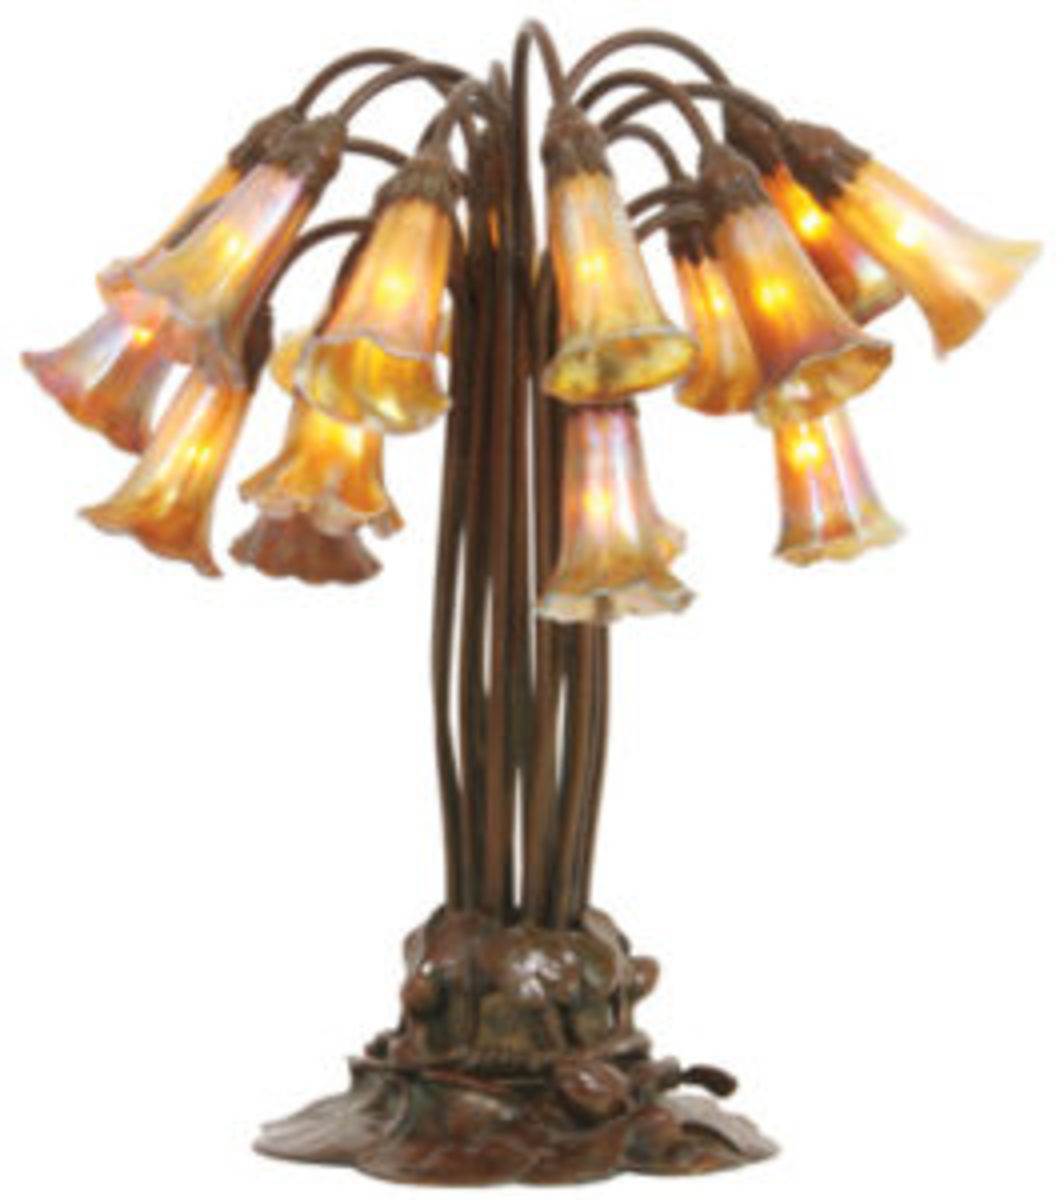 Tiffany Studios Lily Lamp